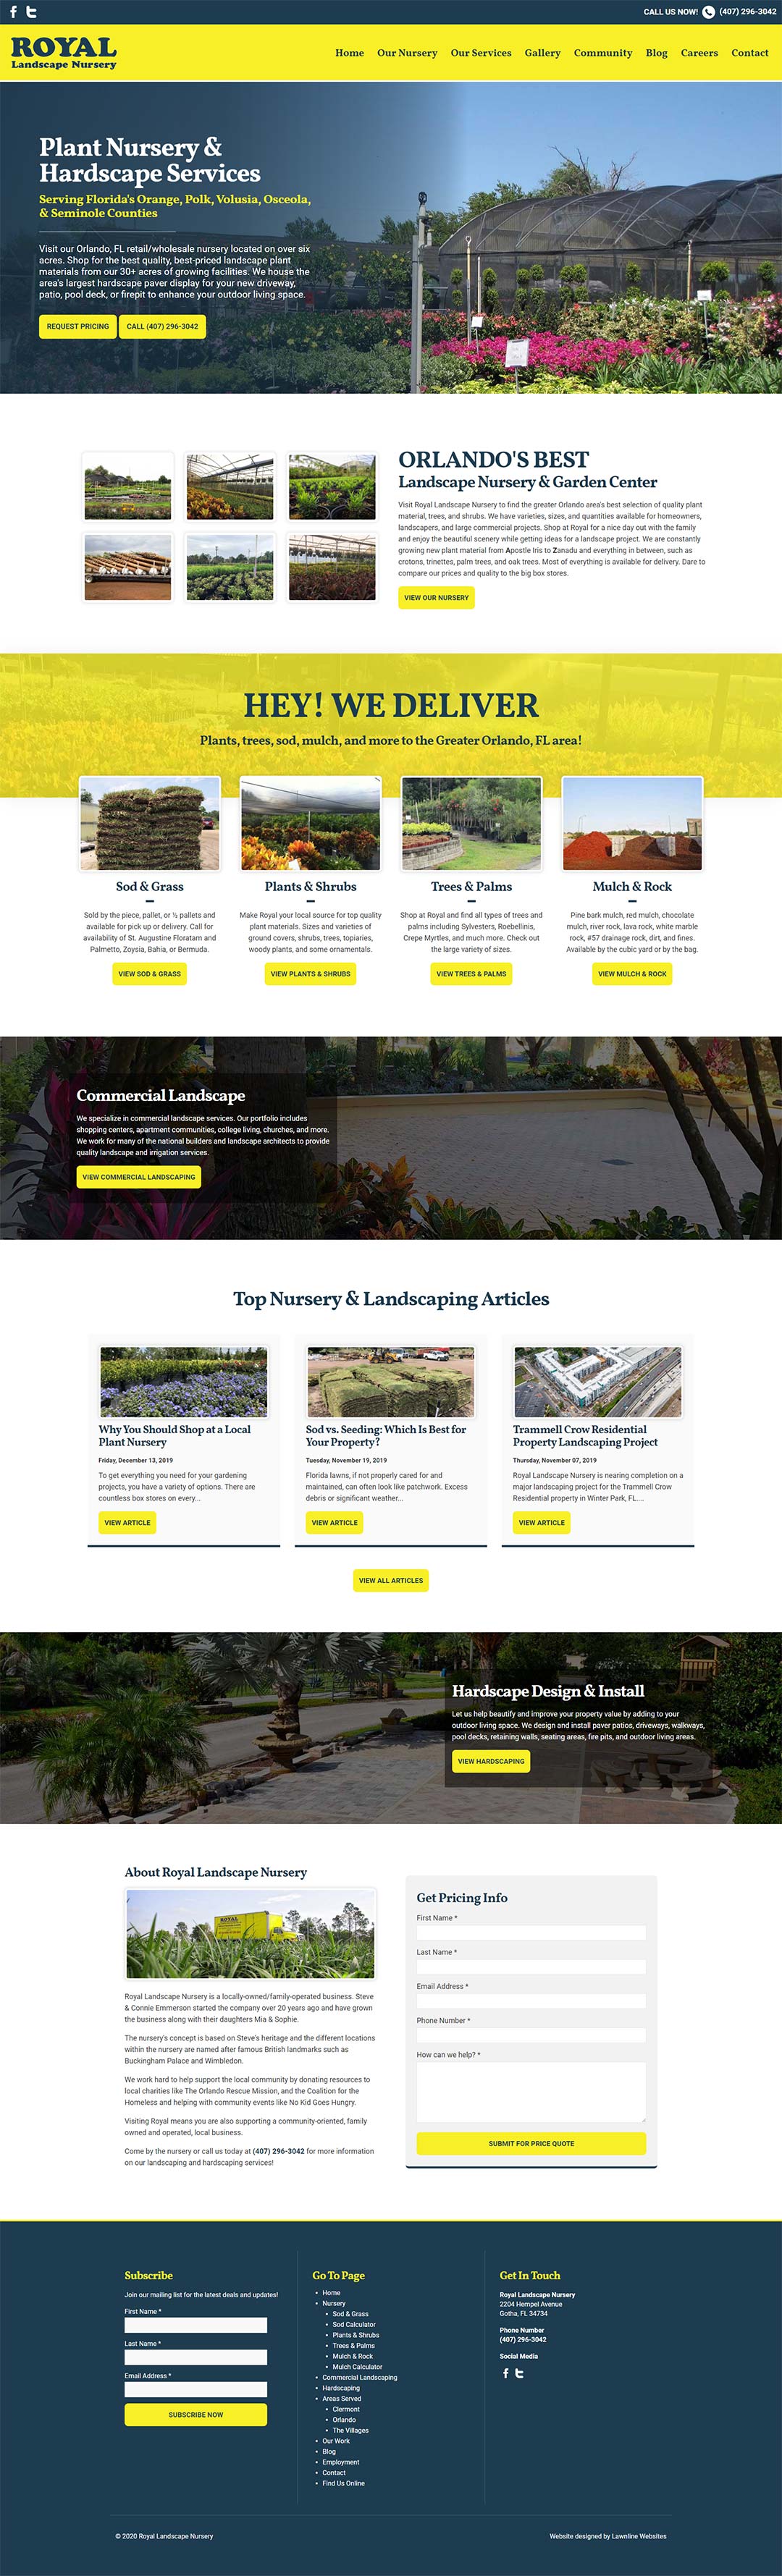 Royal Landscape Nursery Homepage Screenshot